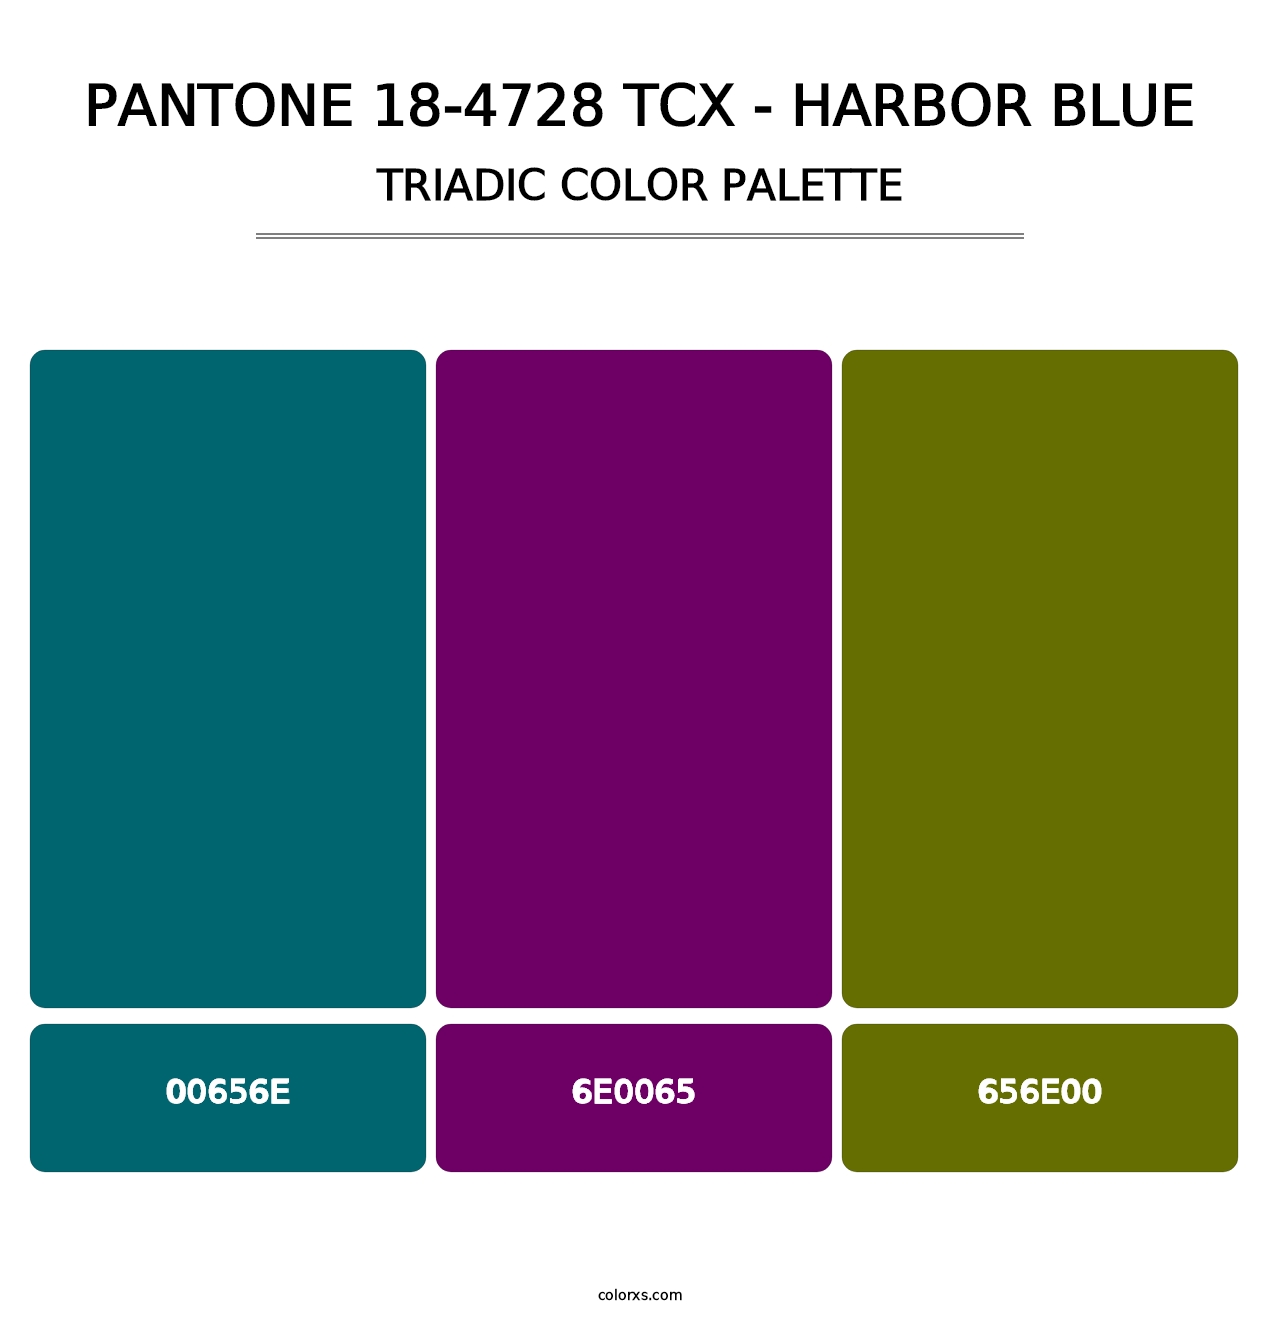 PANTONE 18-4728 TCX - Harbor Blue - Triadic Color Palette